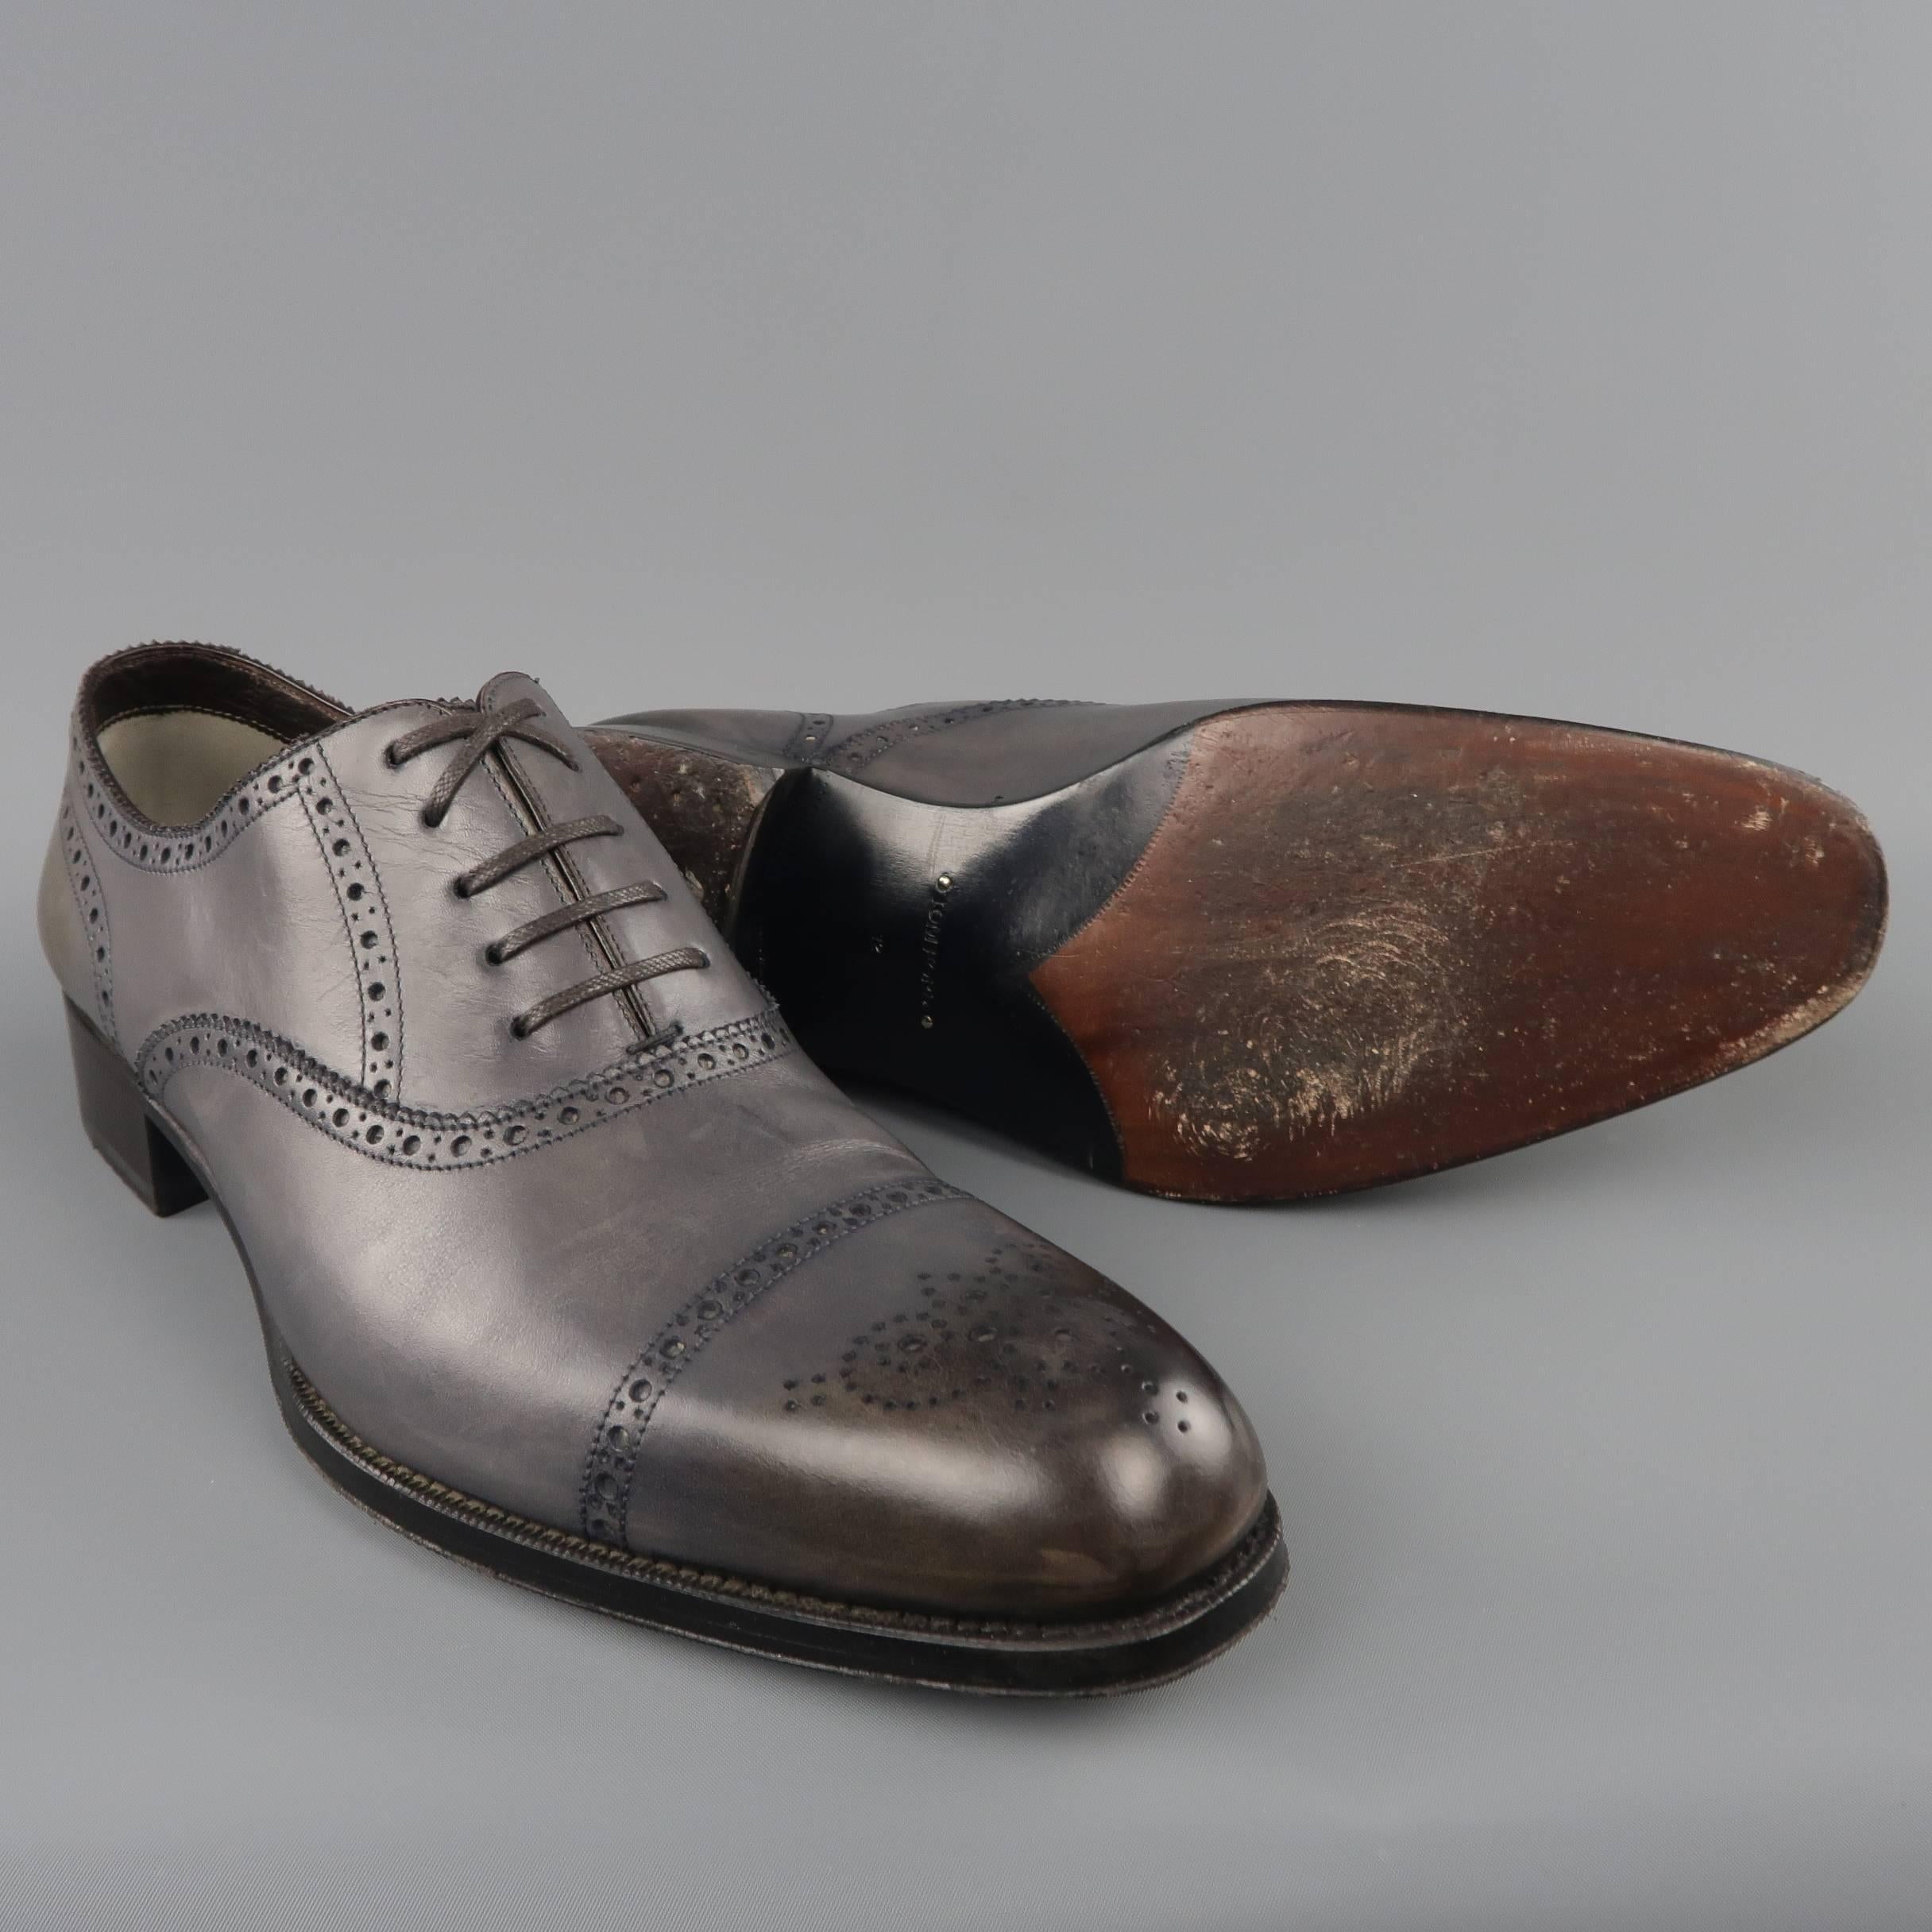 TOM FORD Shoes - Leather, Gray, Black, Dress, Edgar Medallion 2